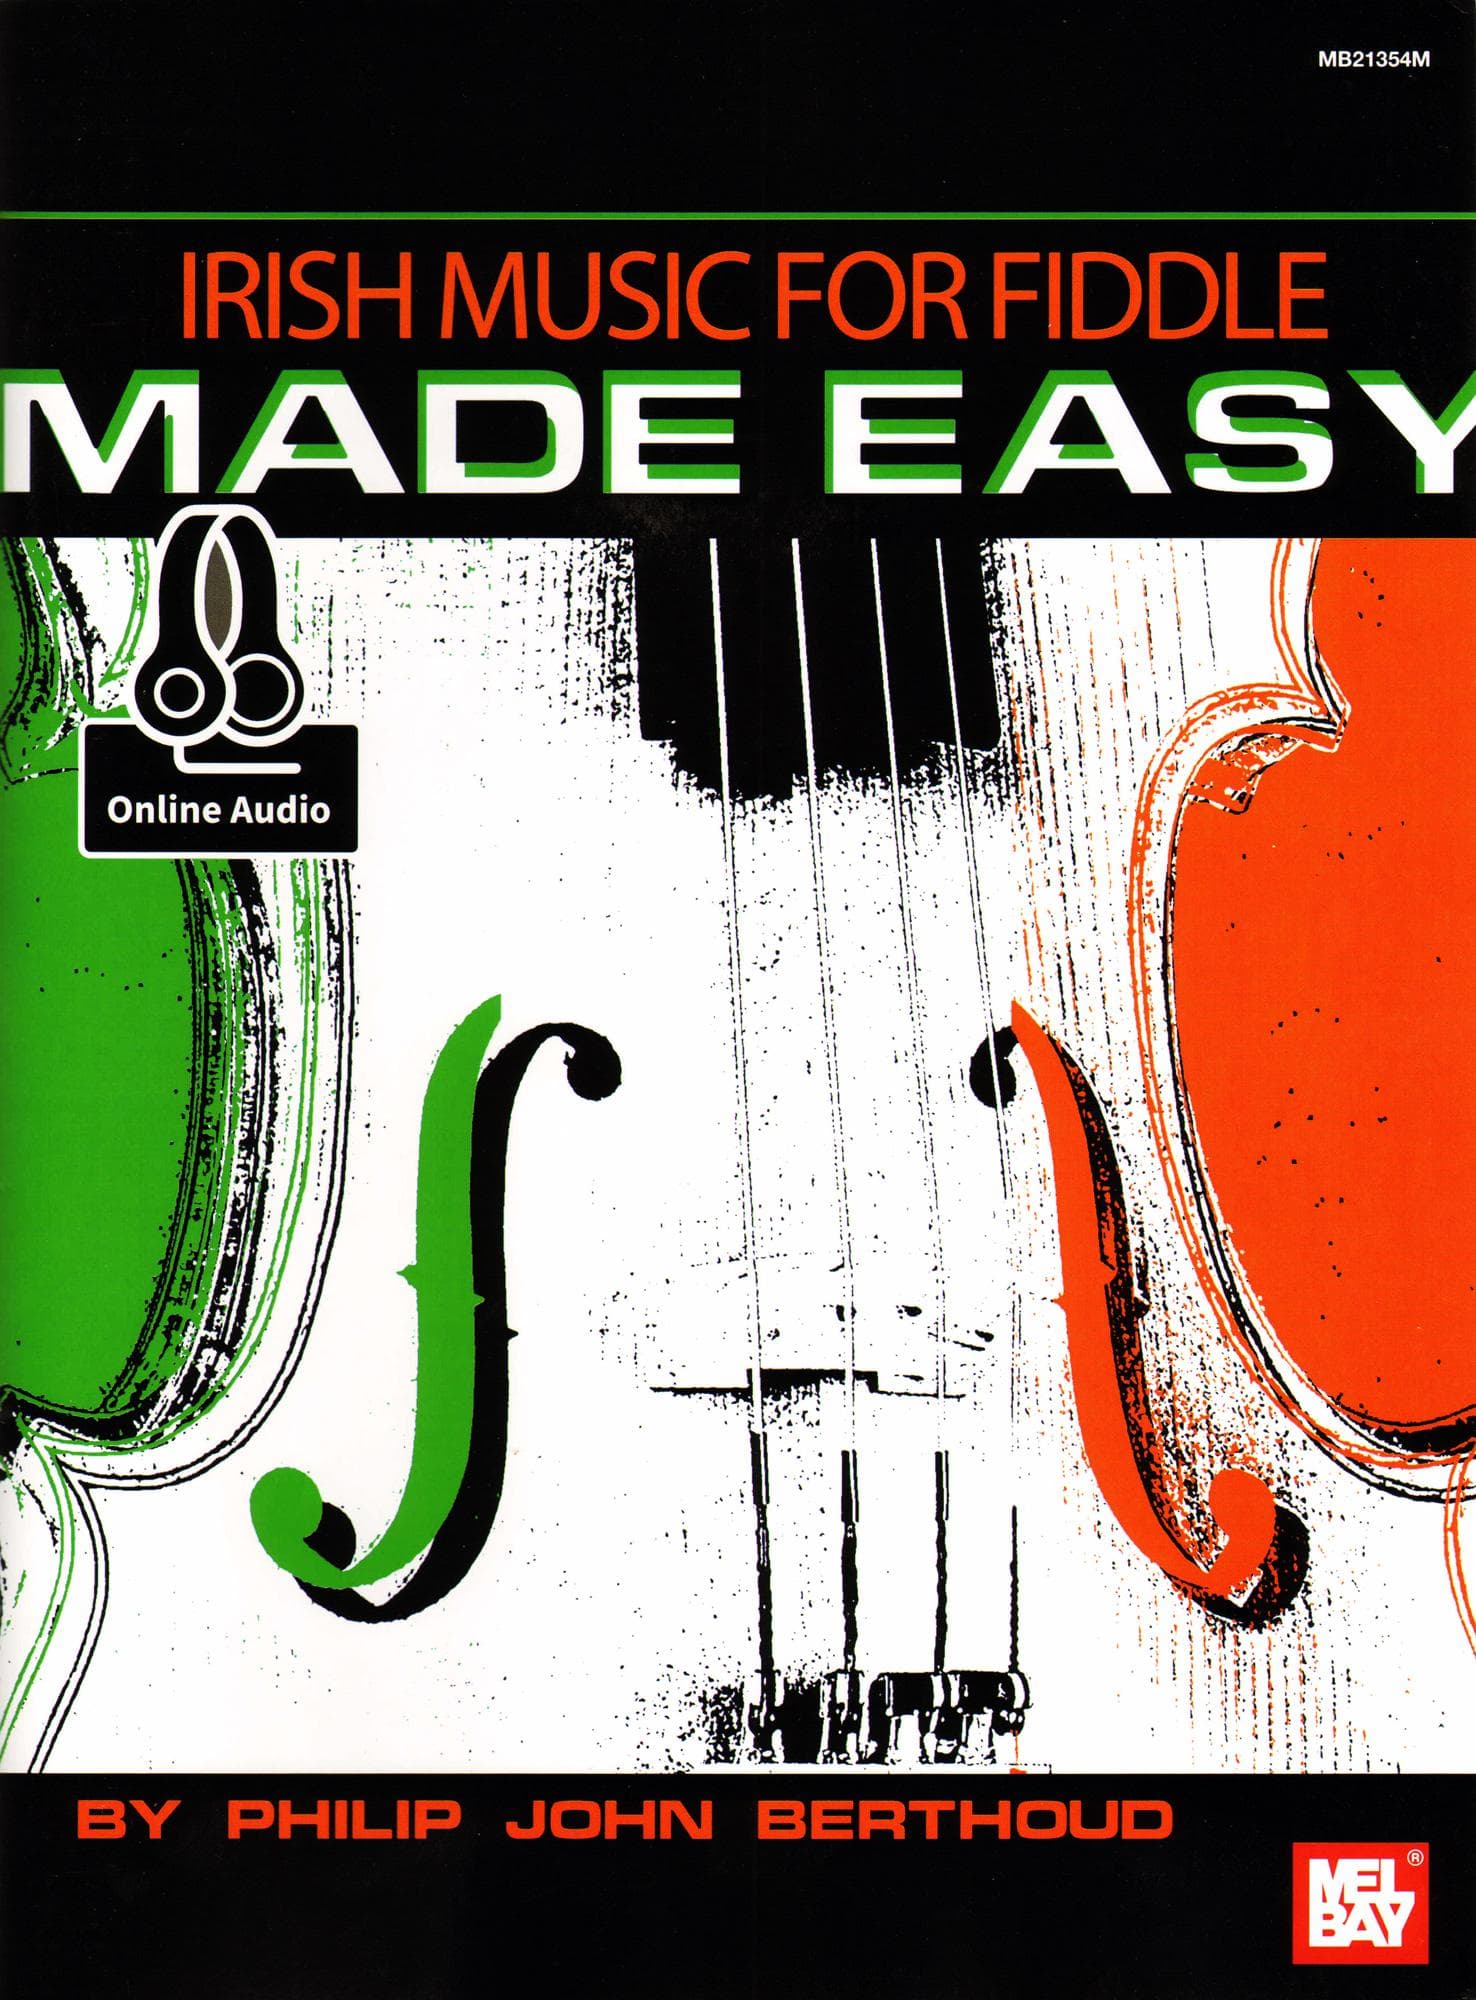 Berthoud, Philip John - Irish Music for Fiddle Made Easy - Violin solo - Book/Online Audio - Mel Bay Publications